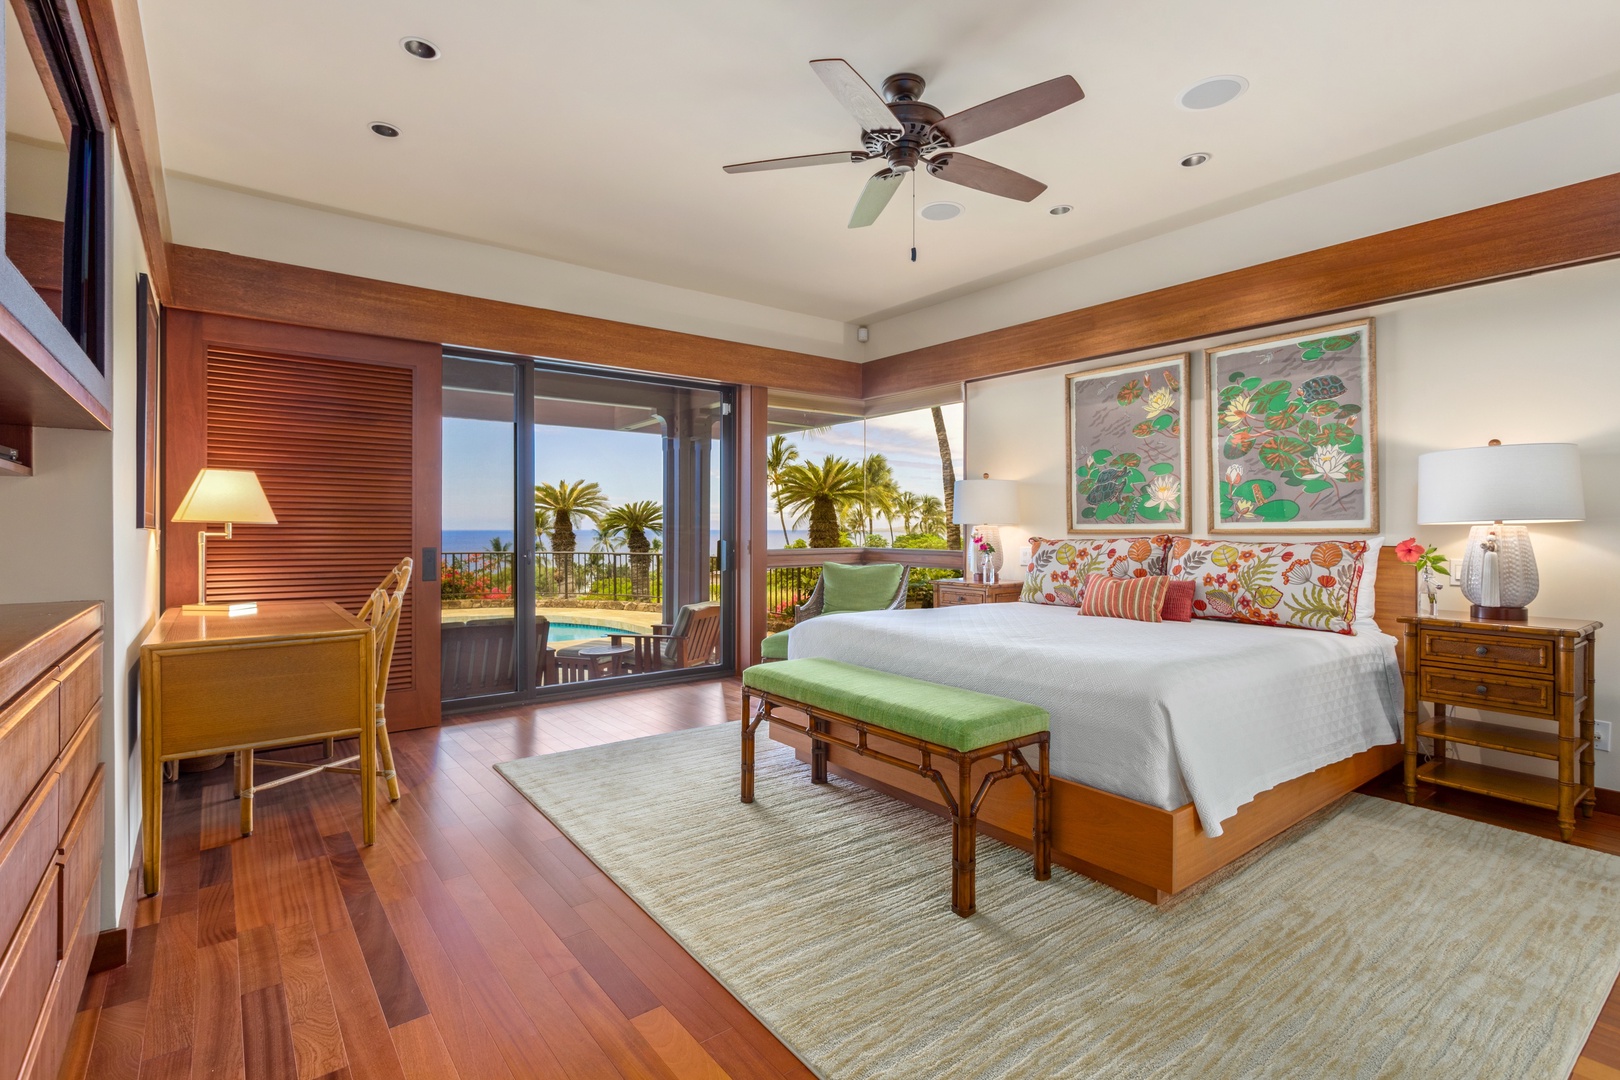 Kamuela Vacation Rentals, 4BD Villas (21) at Mauna Kea Resort - Alternate View of Primary Suite w/Sliding Glass Doors to Pool Deck & Lanai.